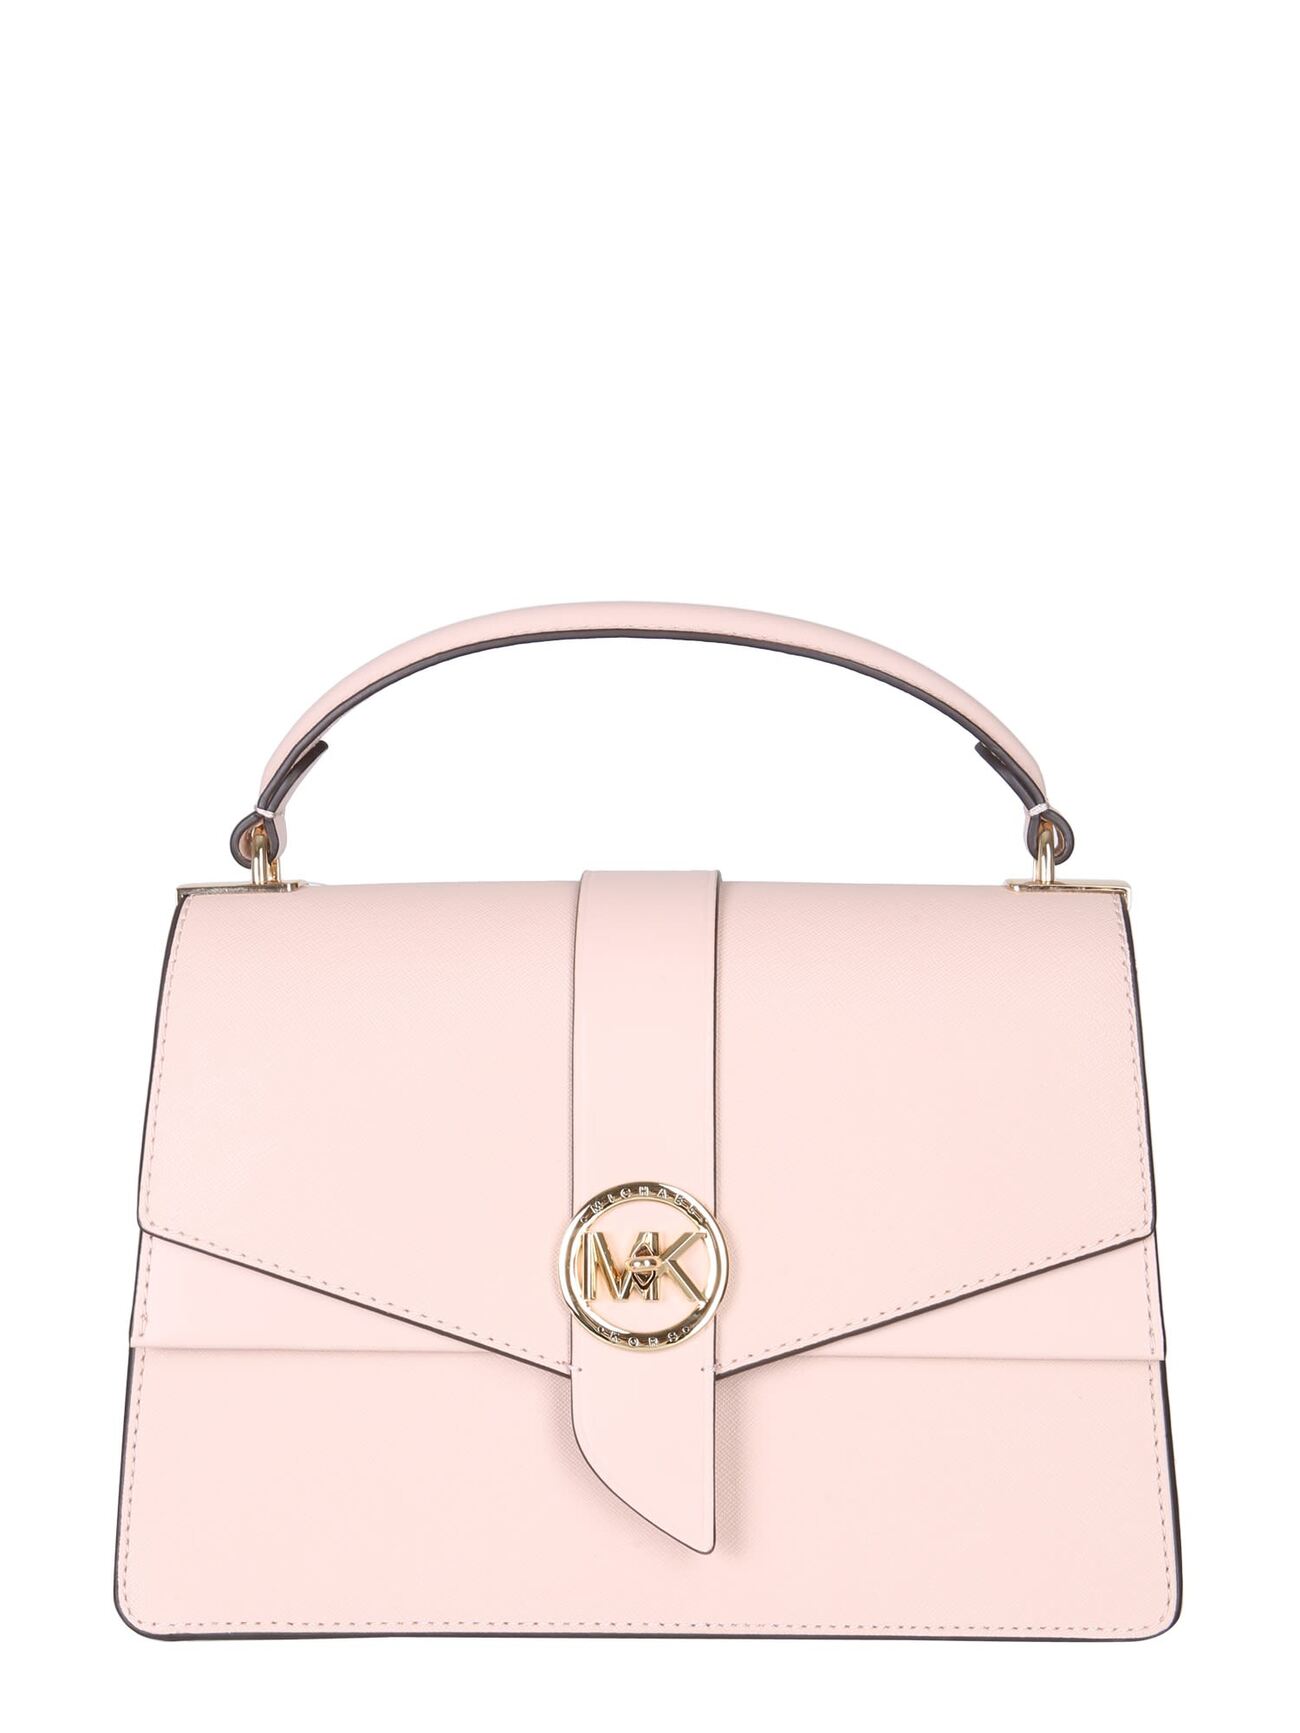 Michael Kors Greenwich Handbag in pink